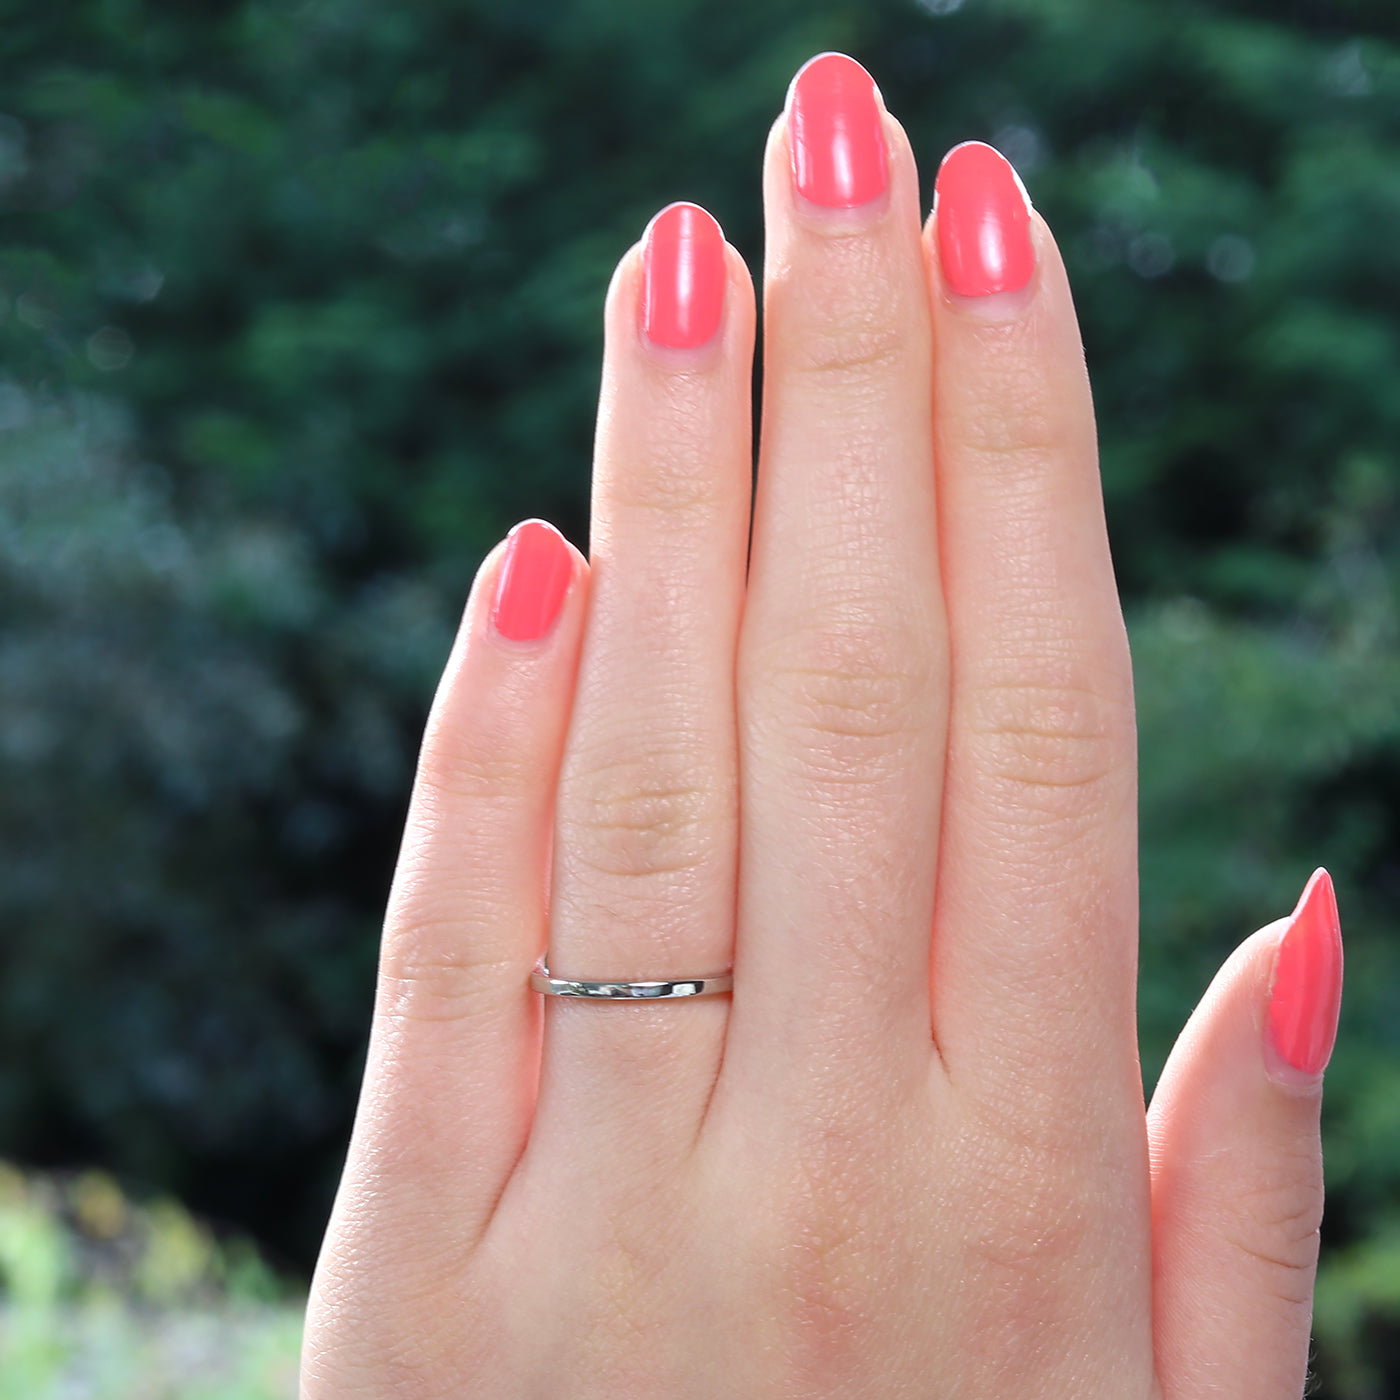 1.5mm Skinny Square Profile 18ct White Gold Wedding Ring